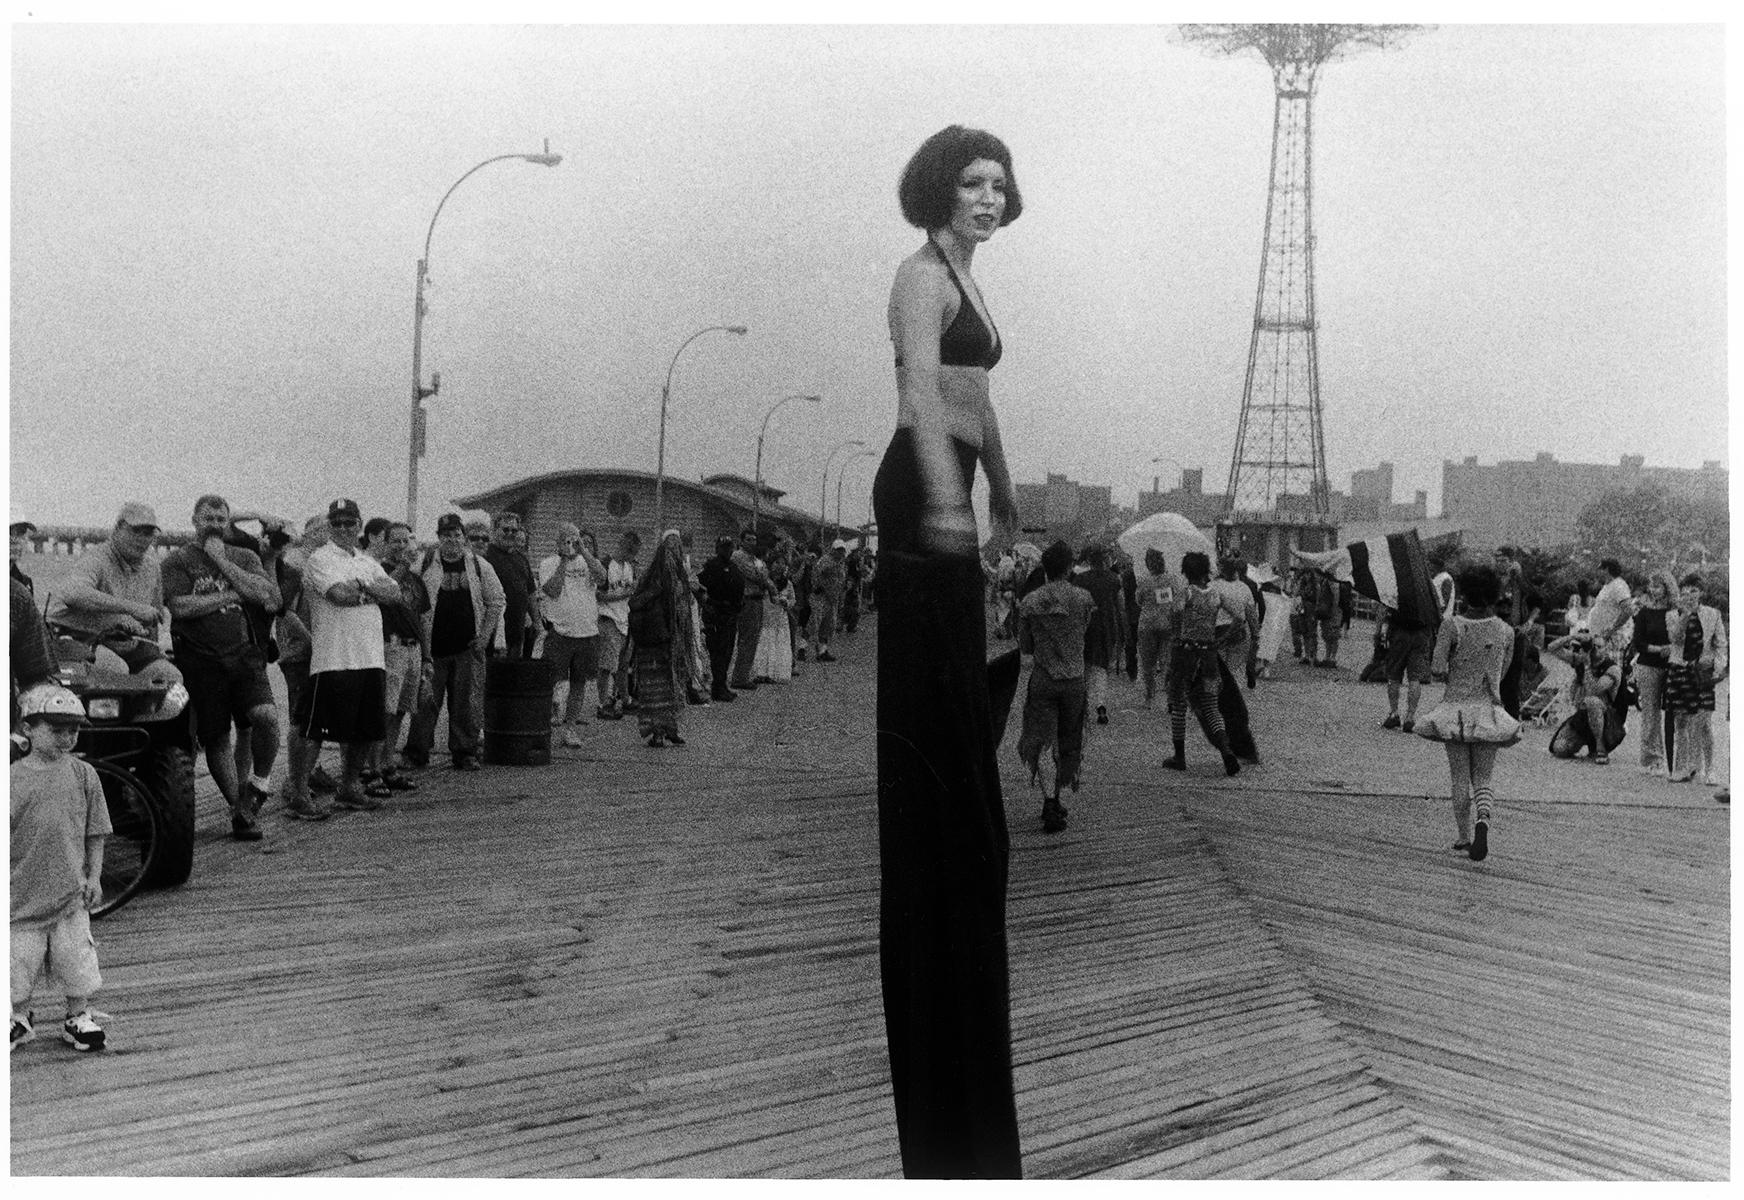 Harvey Stein  Black and White Photograph - Stilt Walker in Mermaid Parade, Cosney Island, Beach, New York 